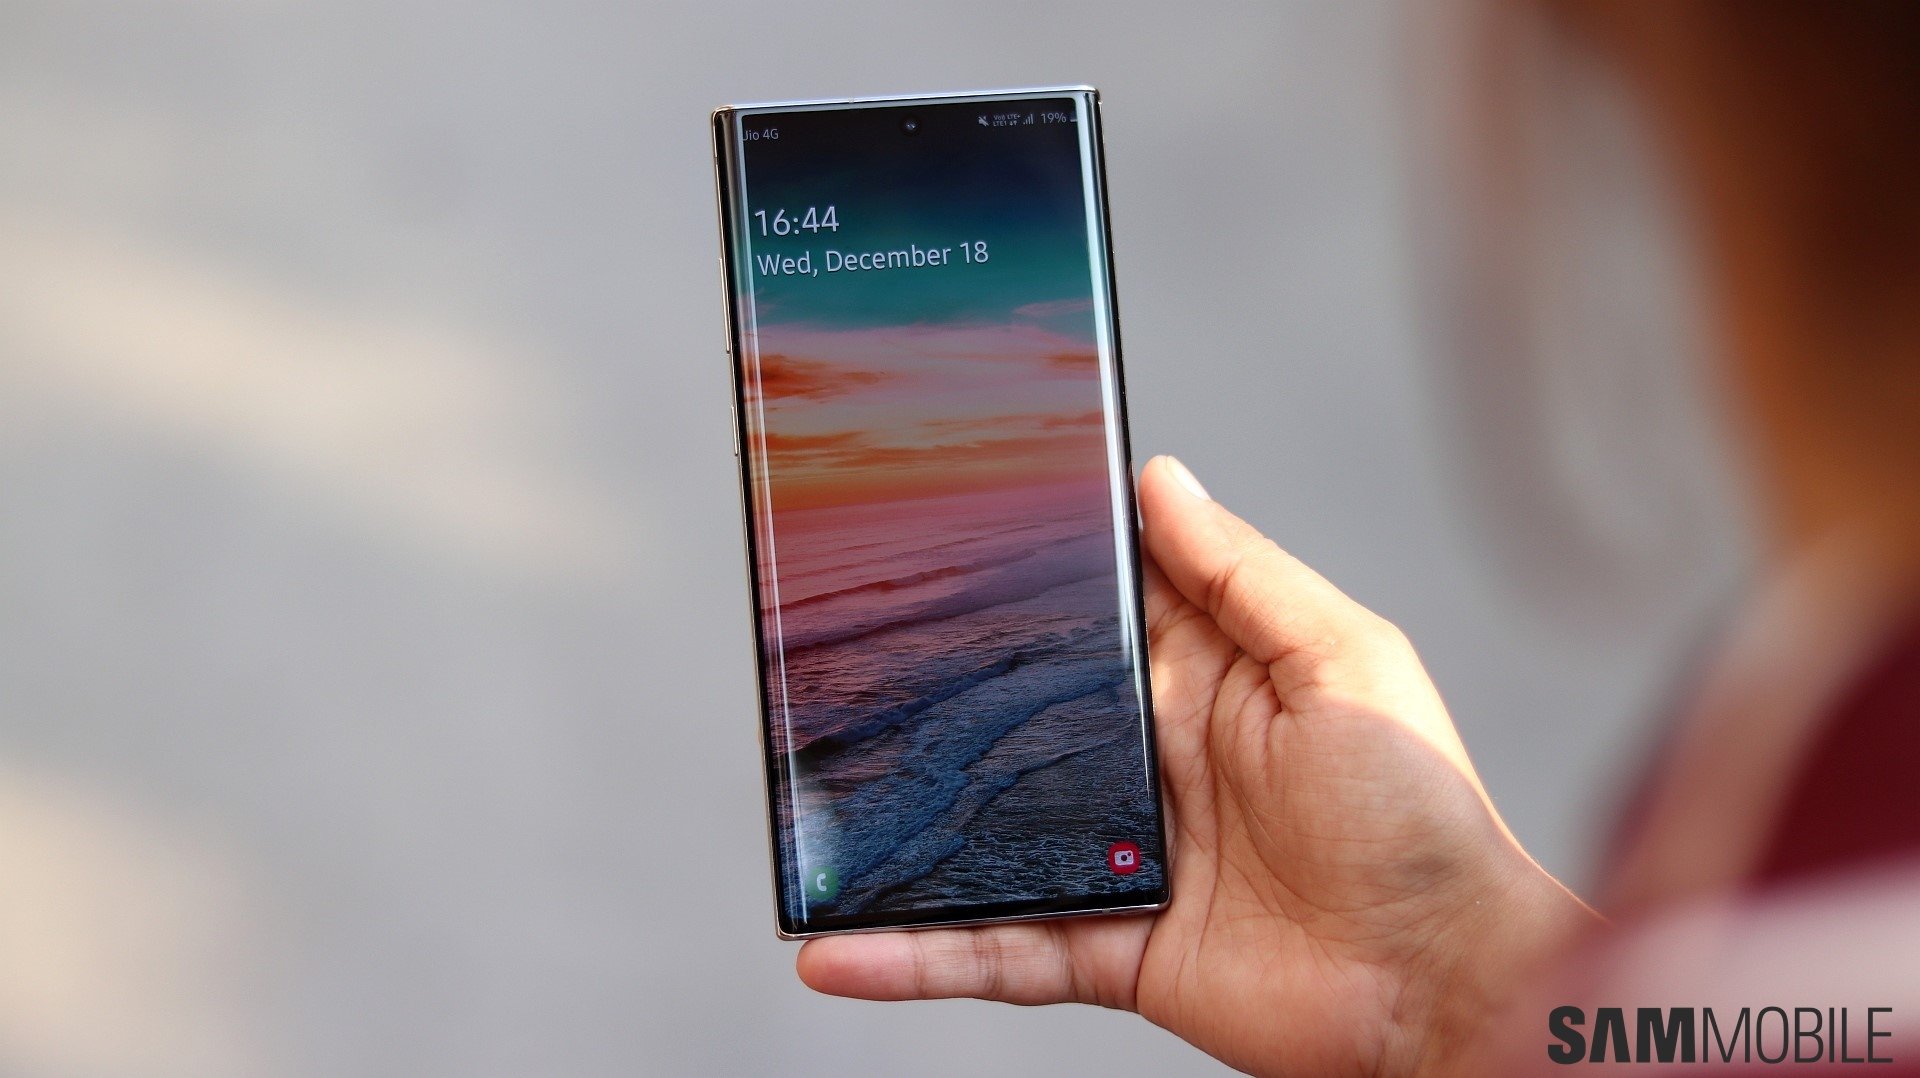 Samsung Note 10 Snapdragon